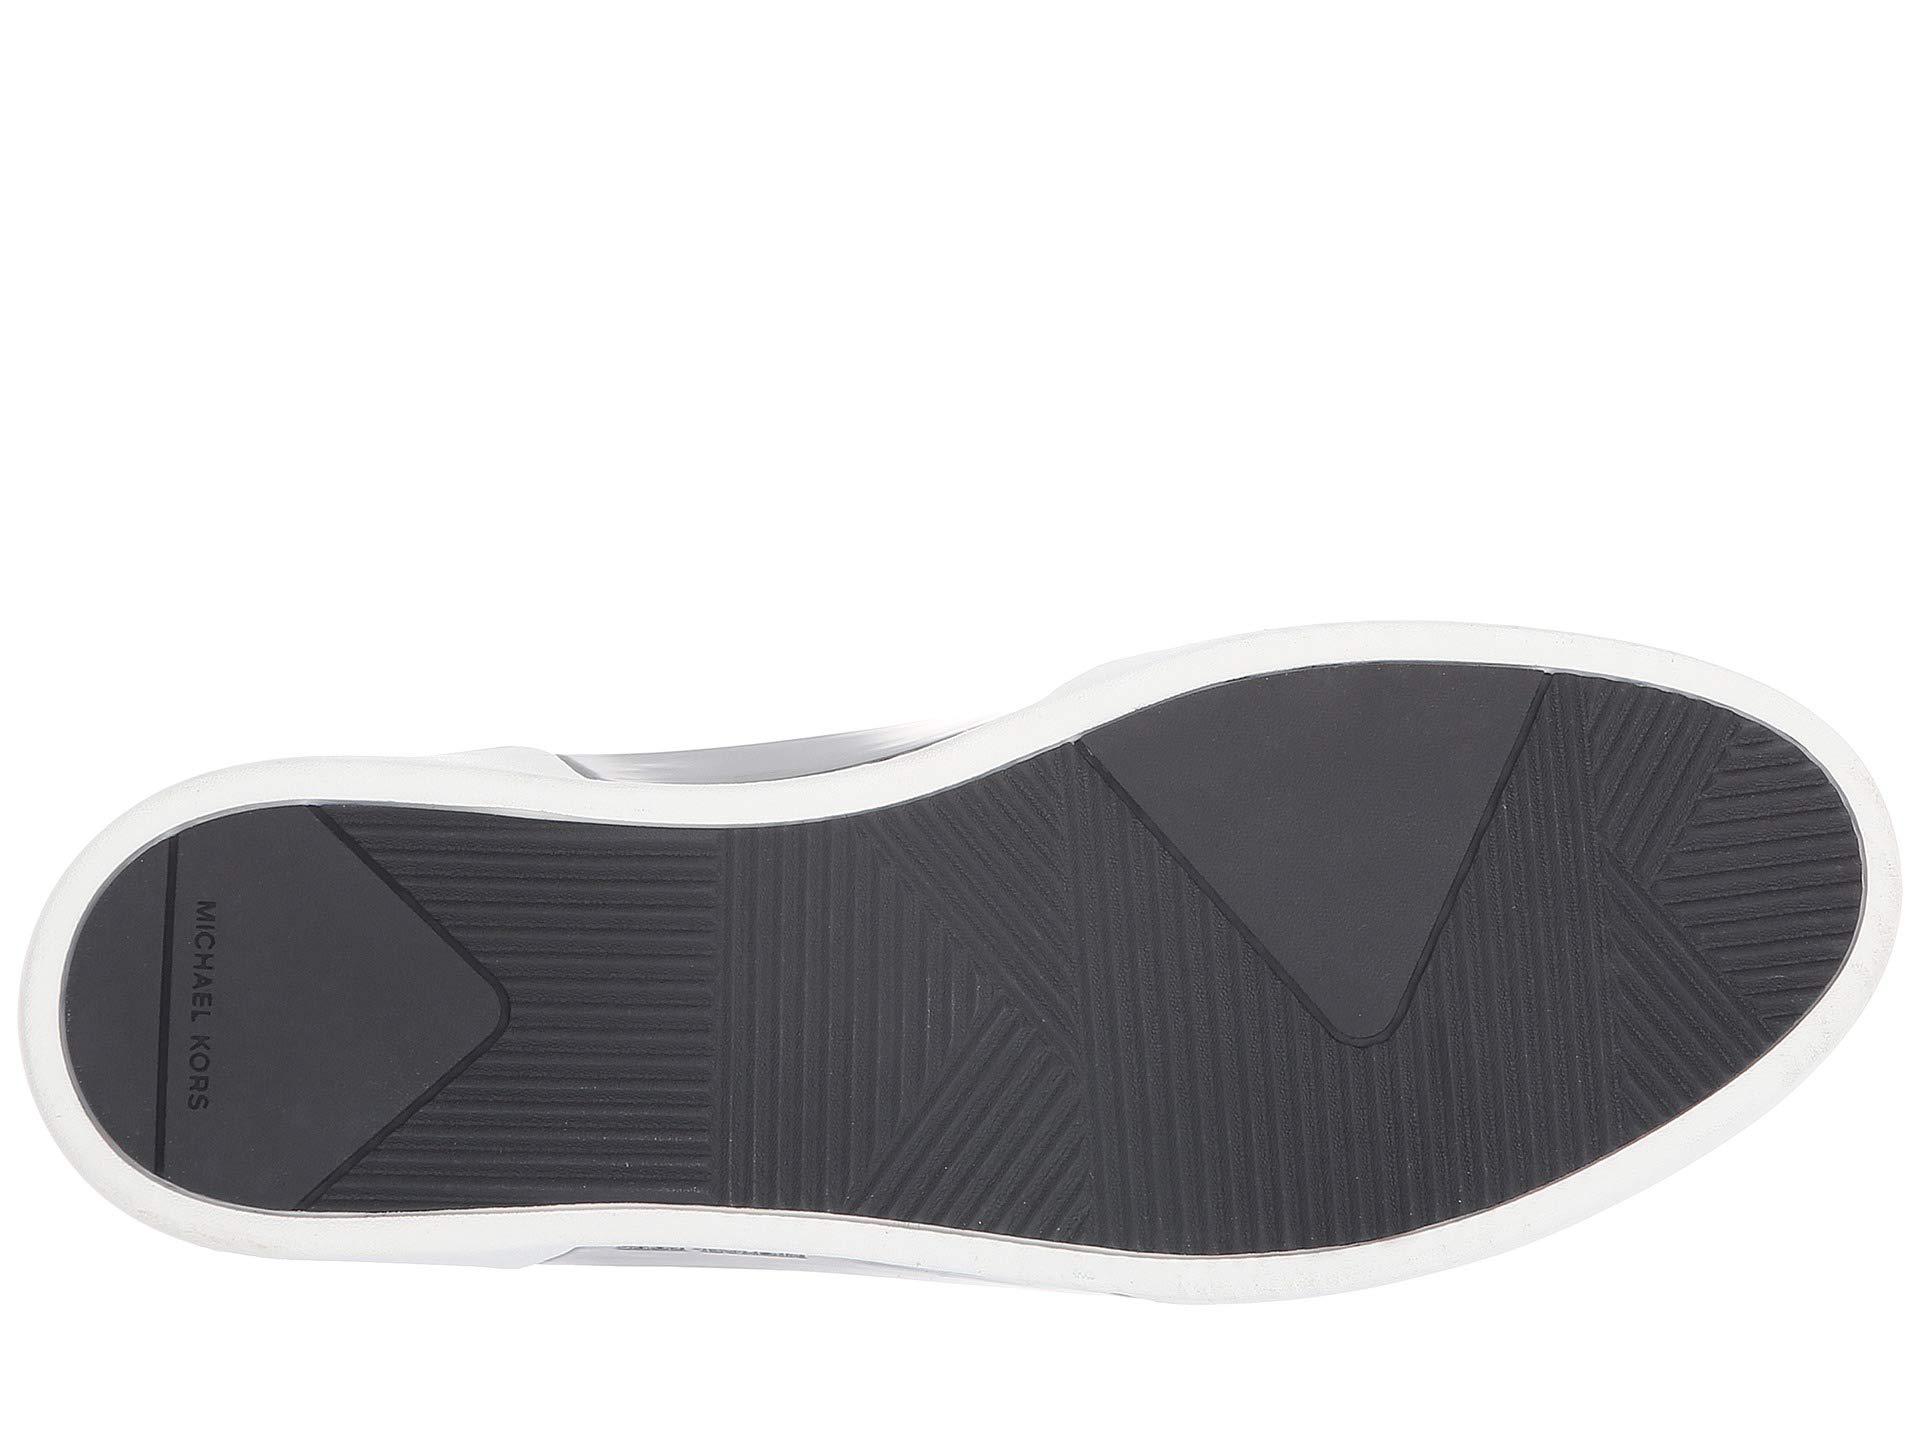 grover slip on sneakers